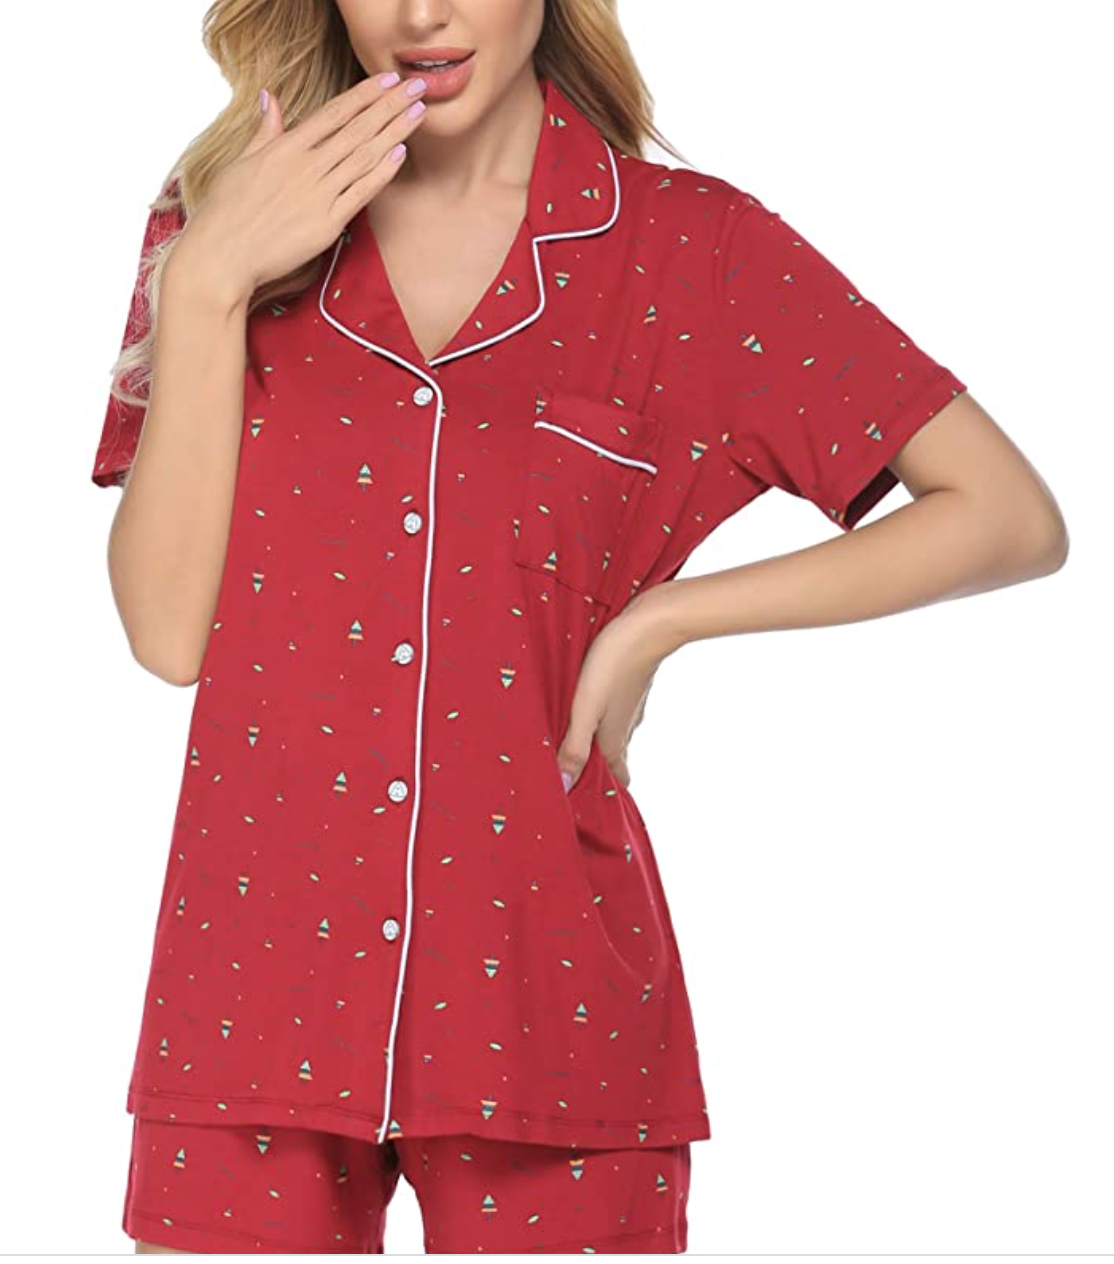 Houmagic Womens Pajama Set Long Sleeve Sleepwear Scoop Neck Soft Pjs Sets S-4XL